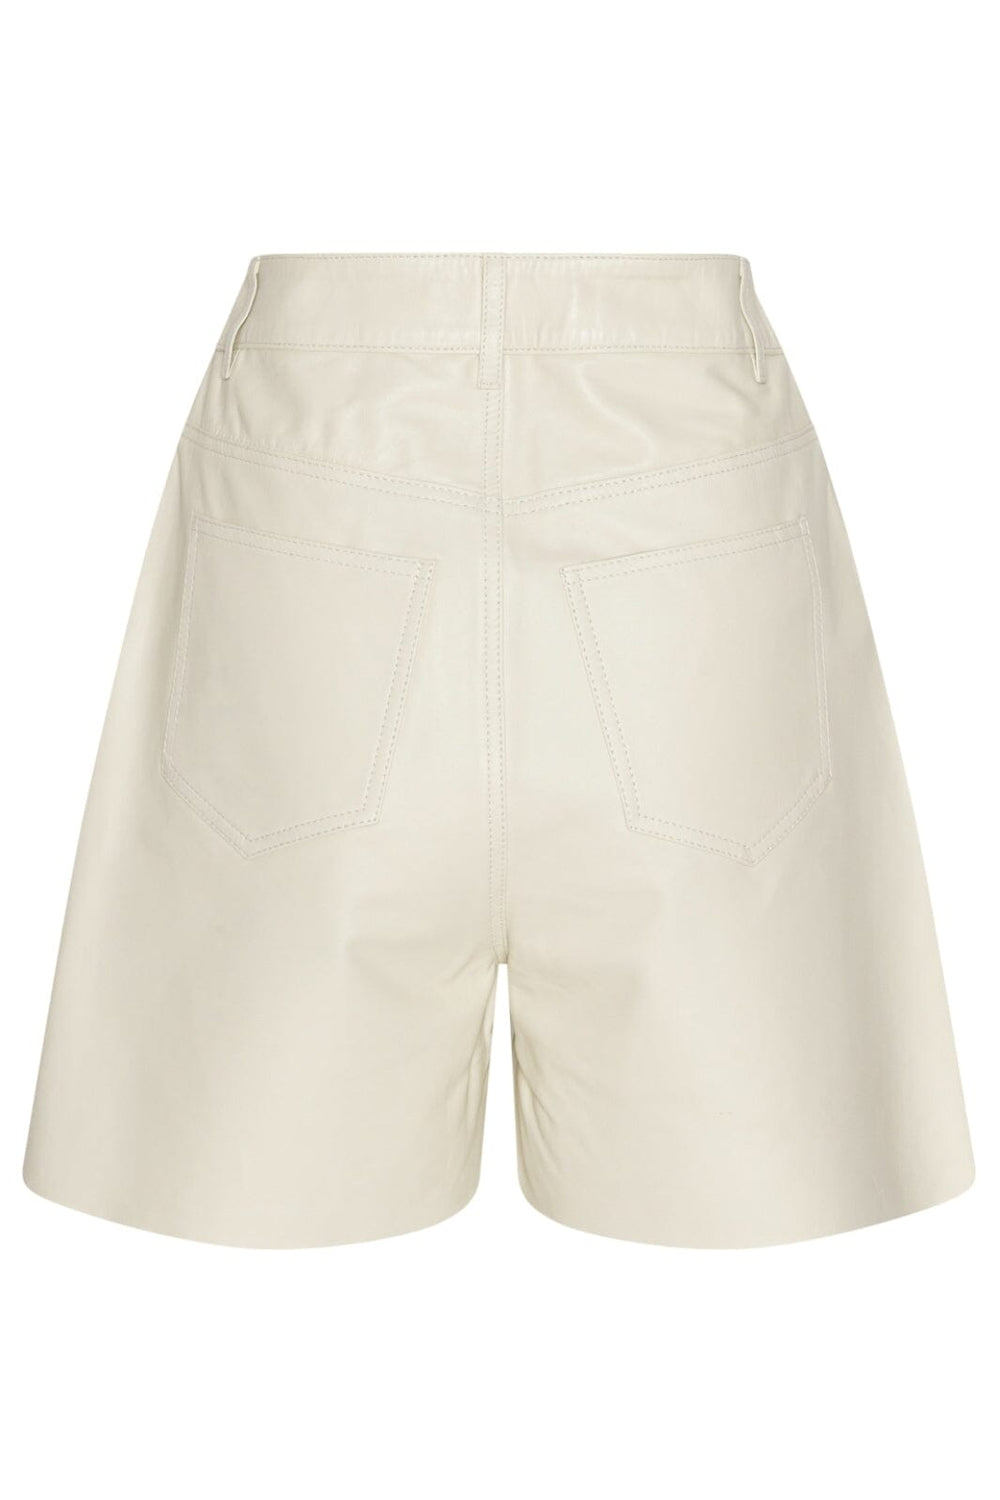 Custommade - Nava - Whisper White Shorts 